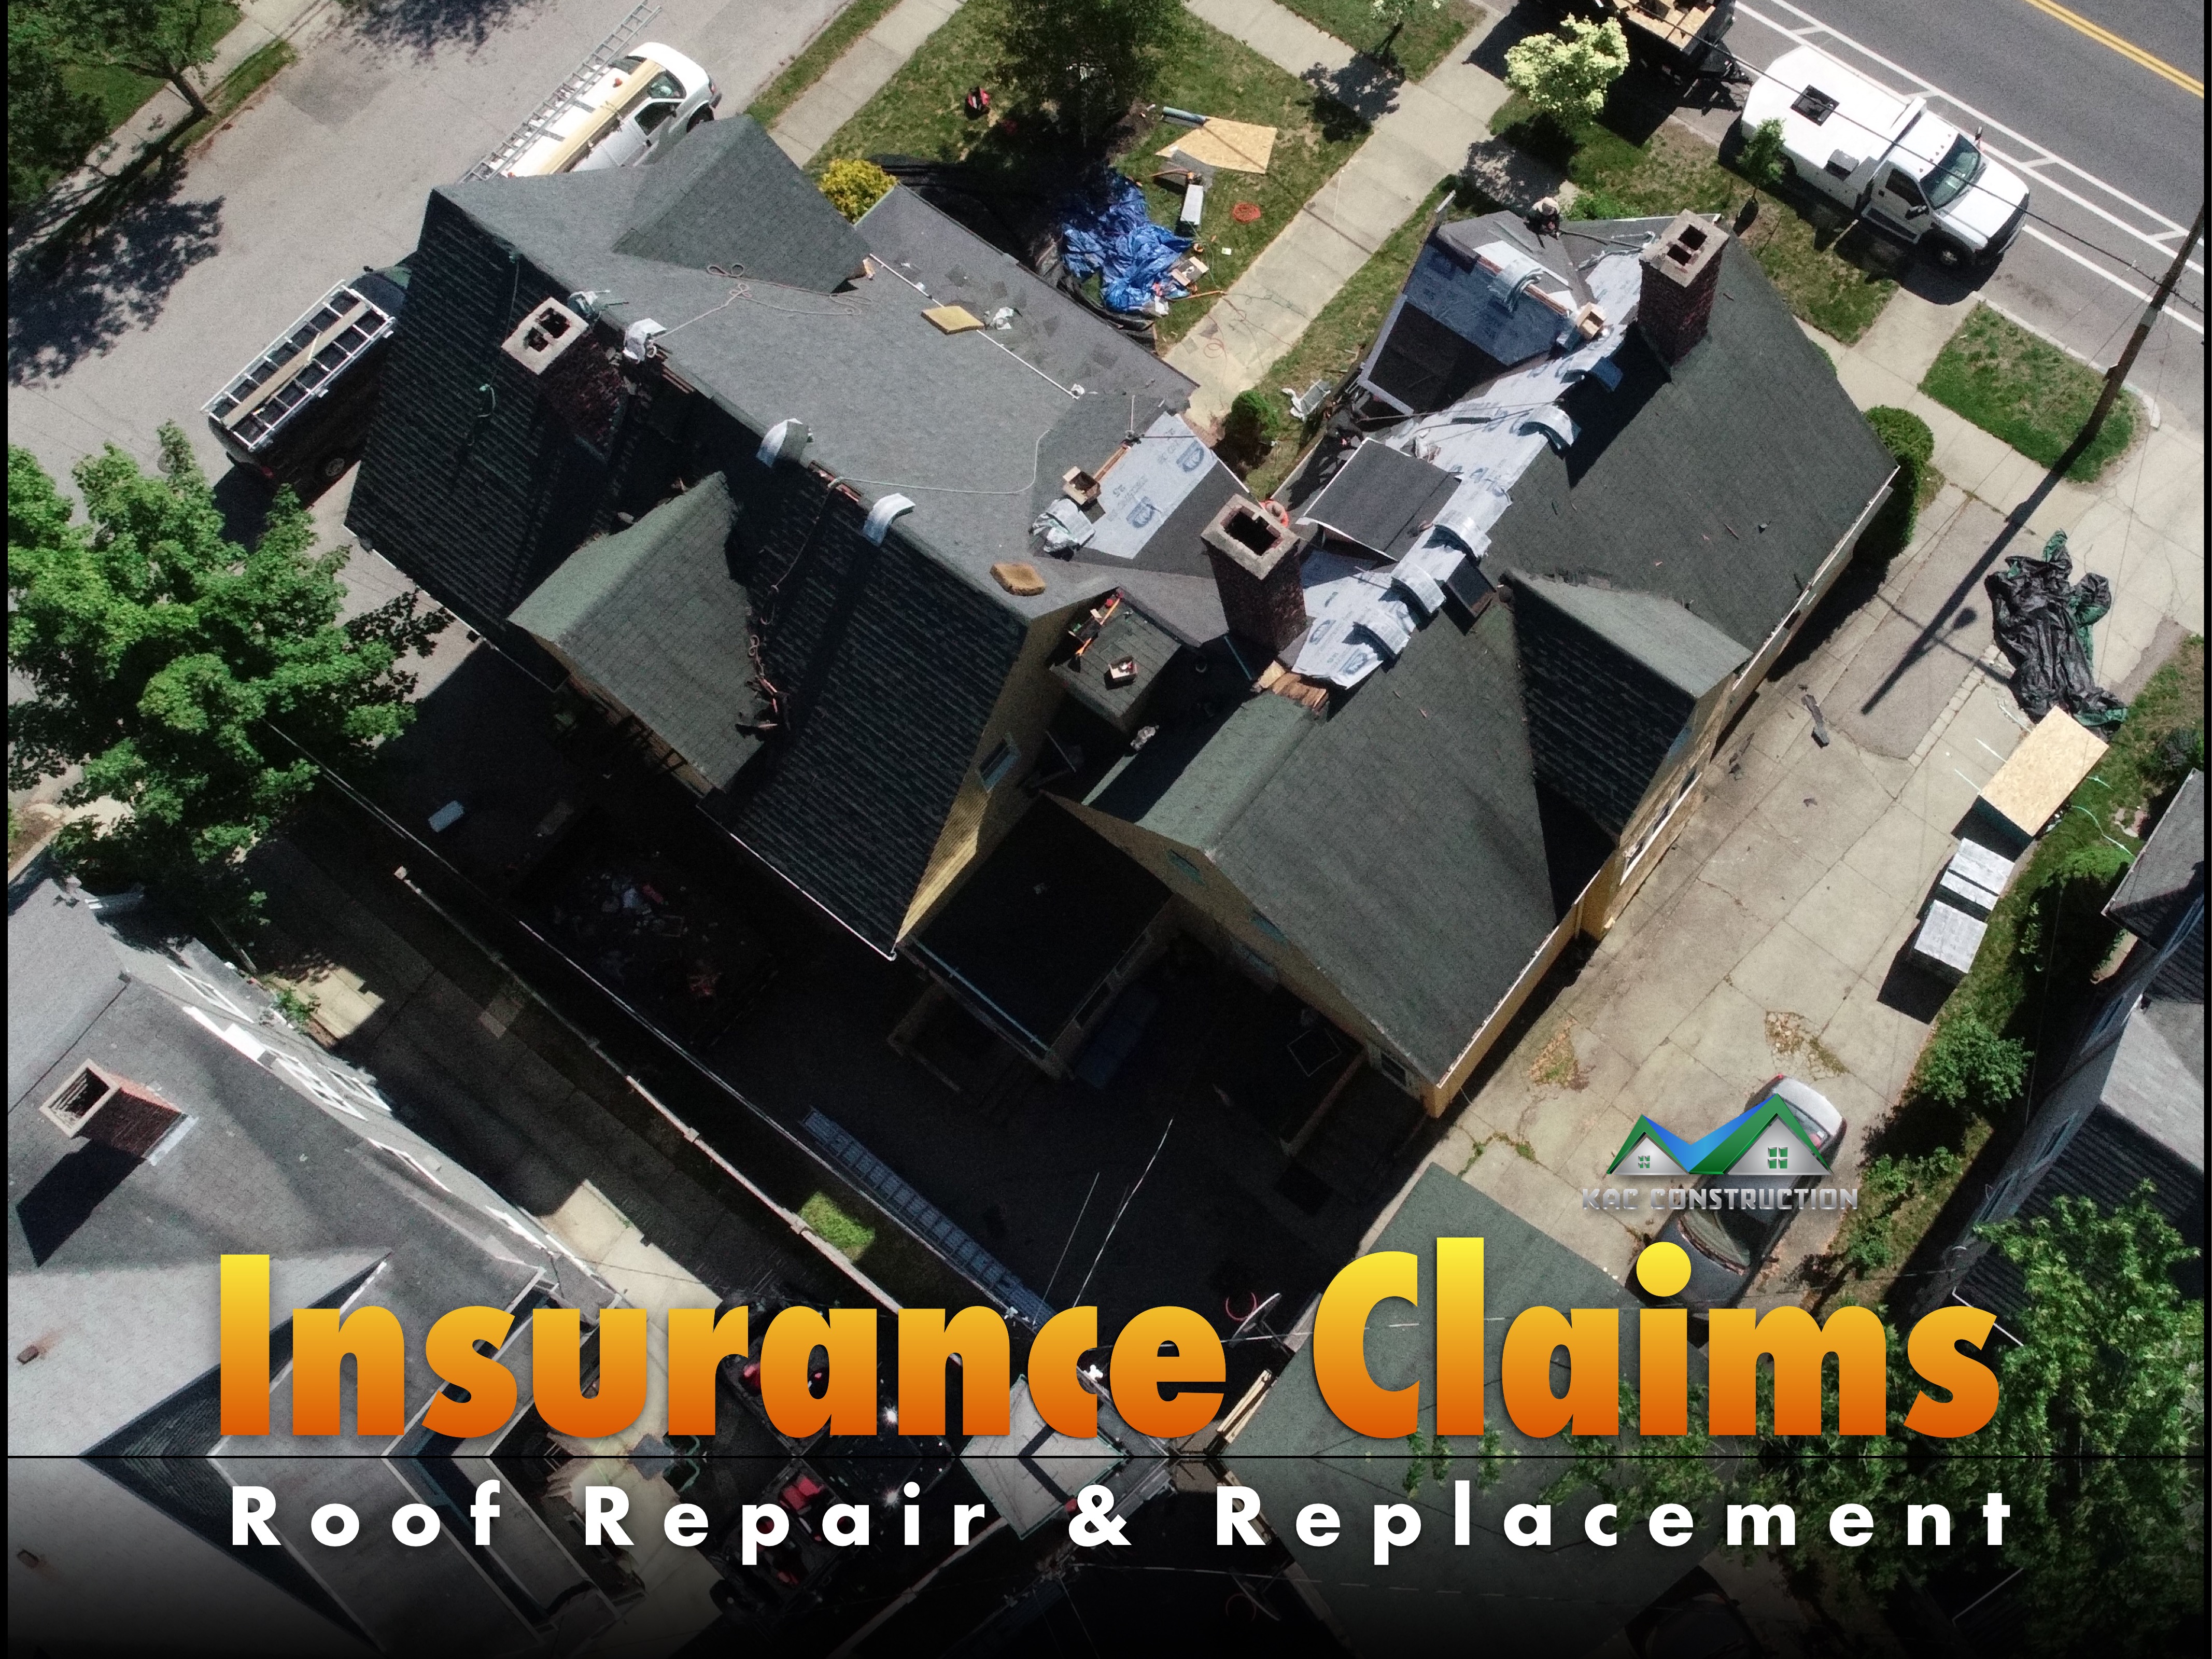 Insurance roof claim, insurance roof claim ri, insurance claim ri, insurance roof Claims ri, insurance Claims ri